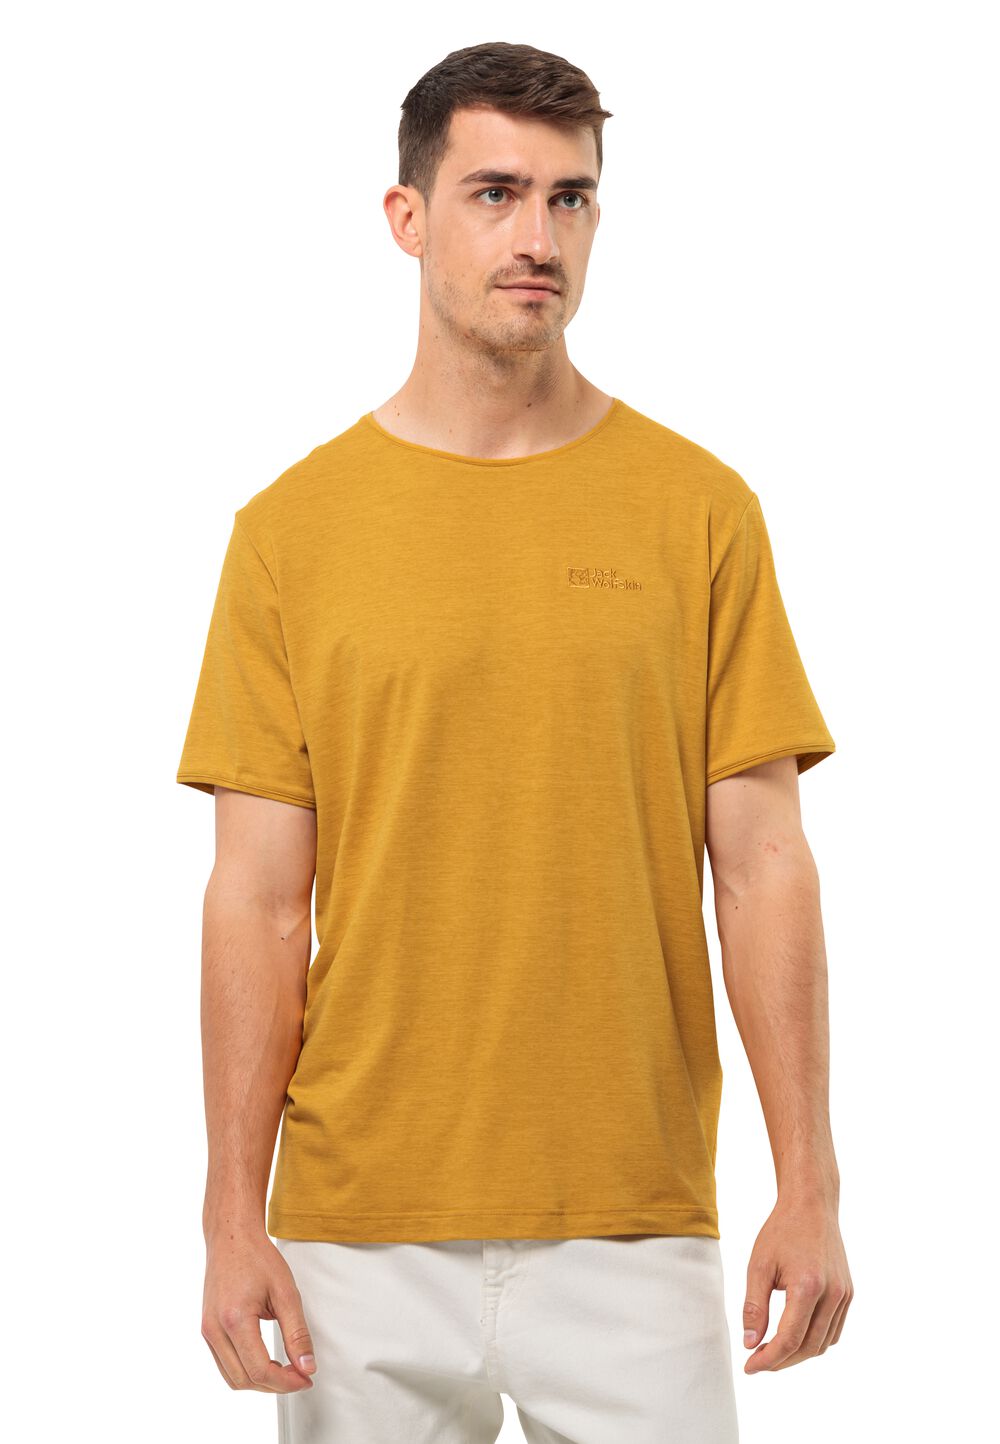 Jack Wolfskin Travel T-Shirt Men Functioneel shirt Heren S bruin curry